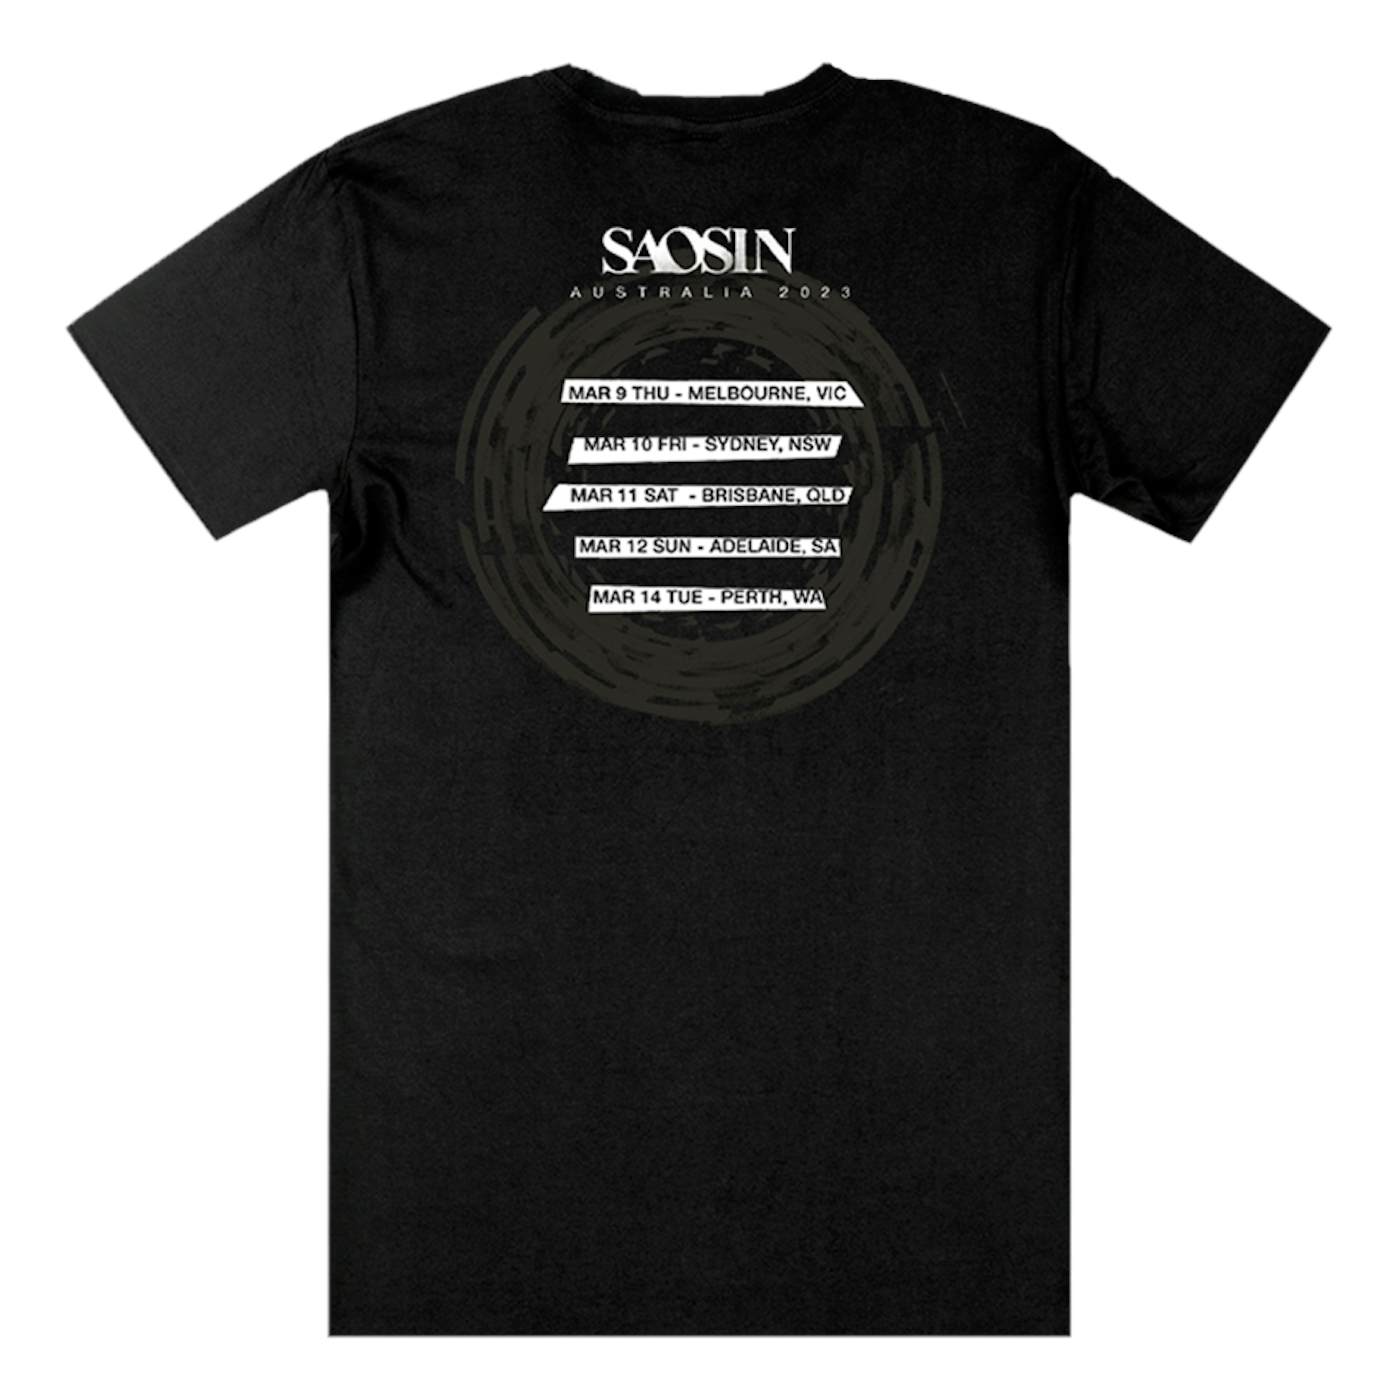 Saosin "Concentric" T-Shirt